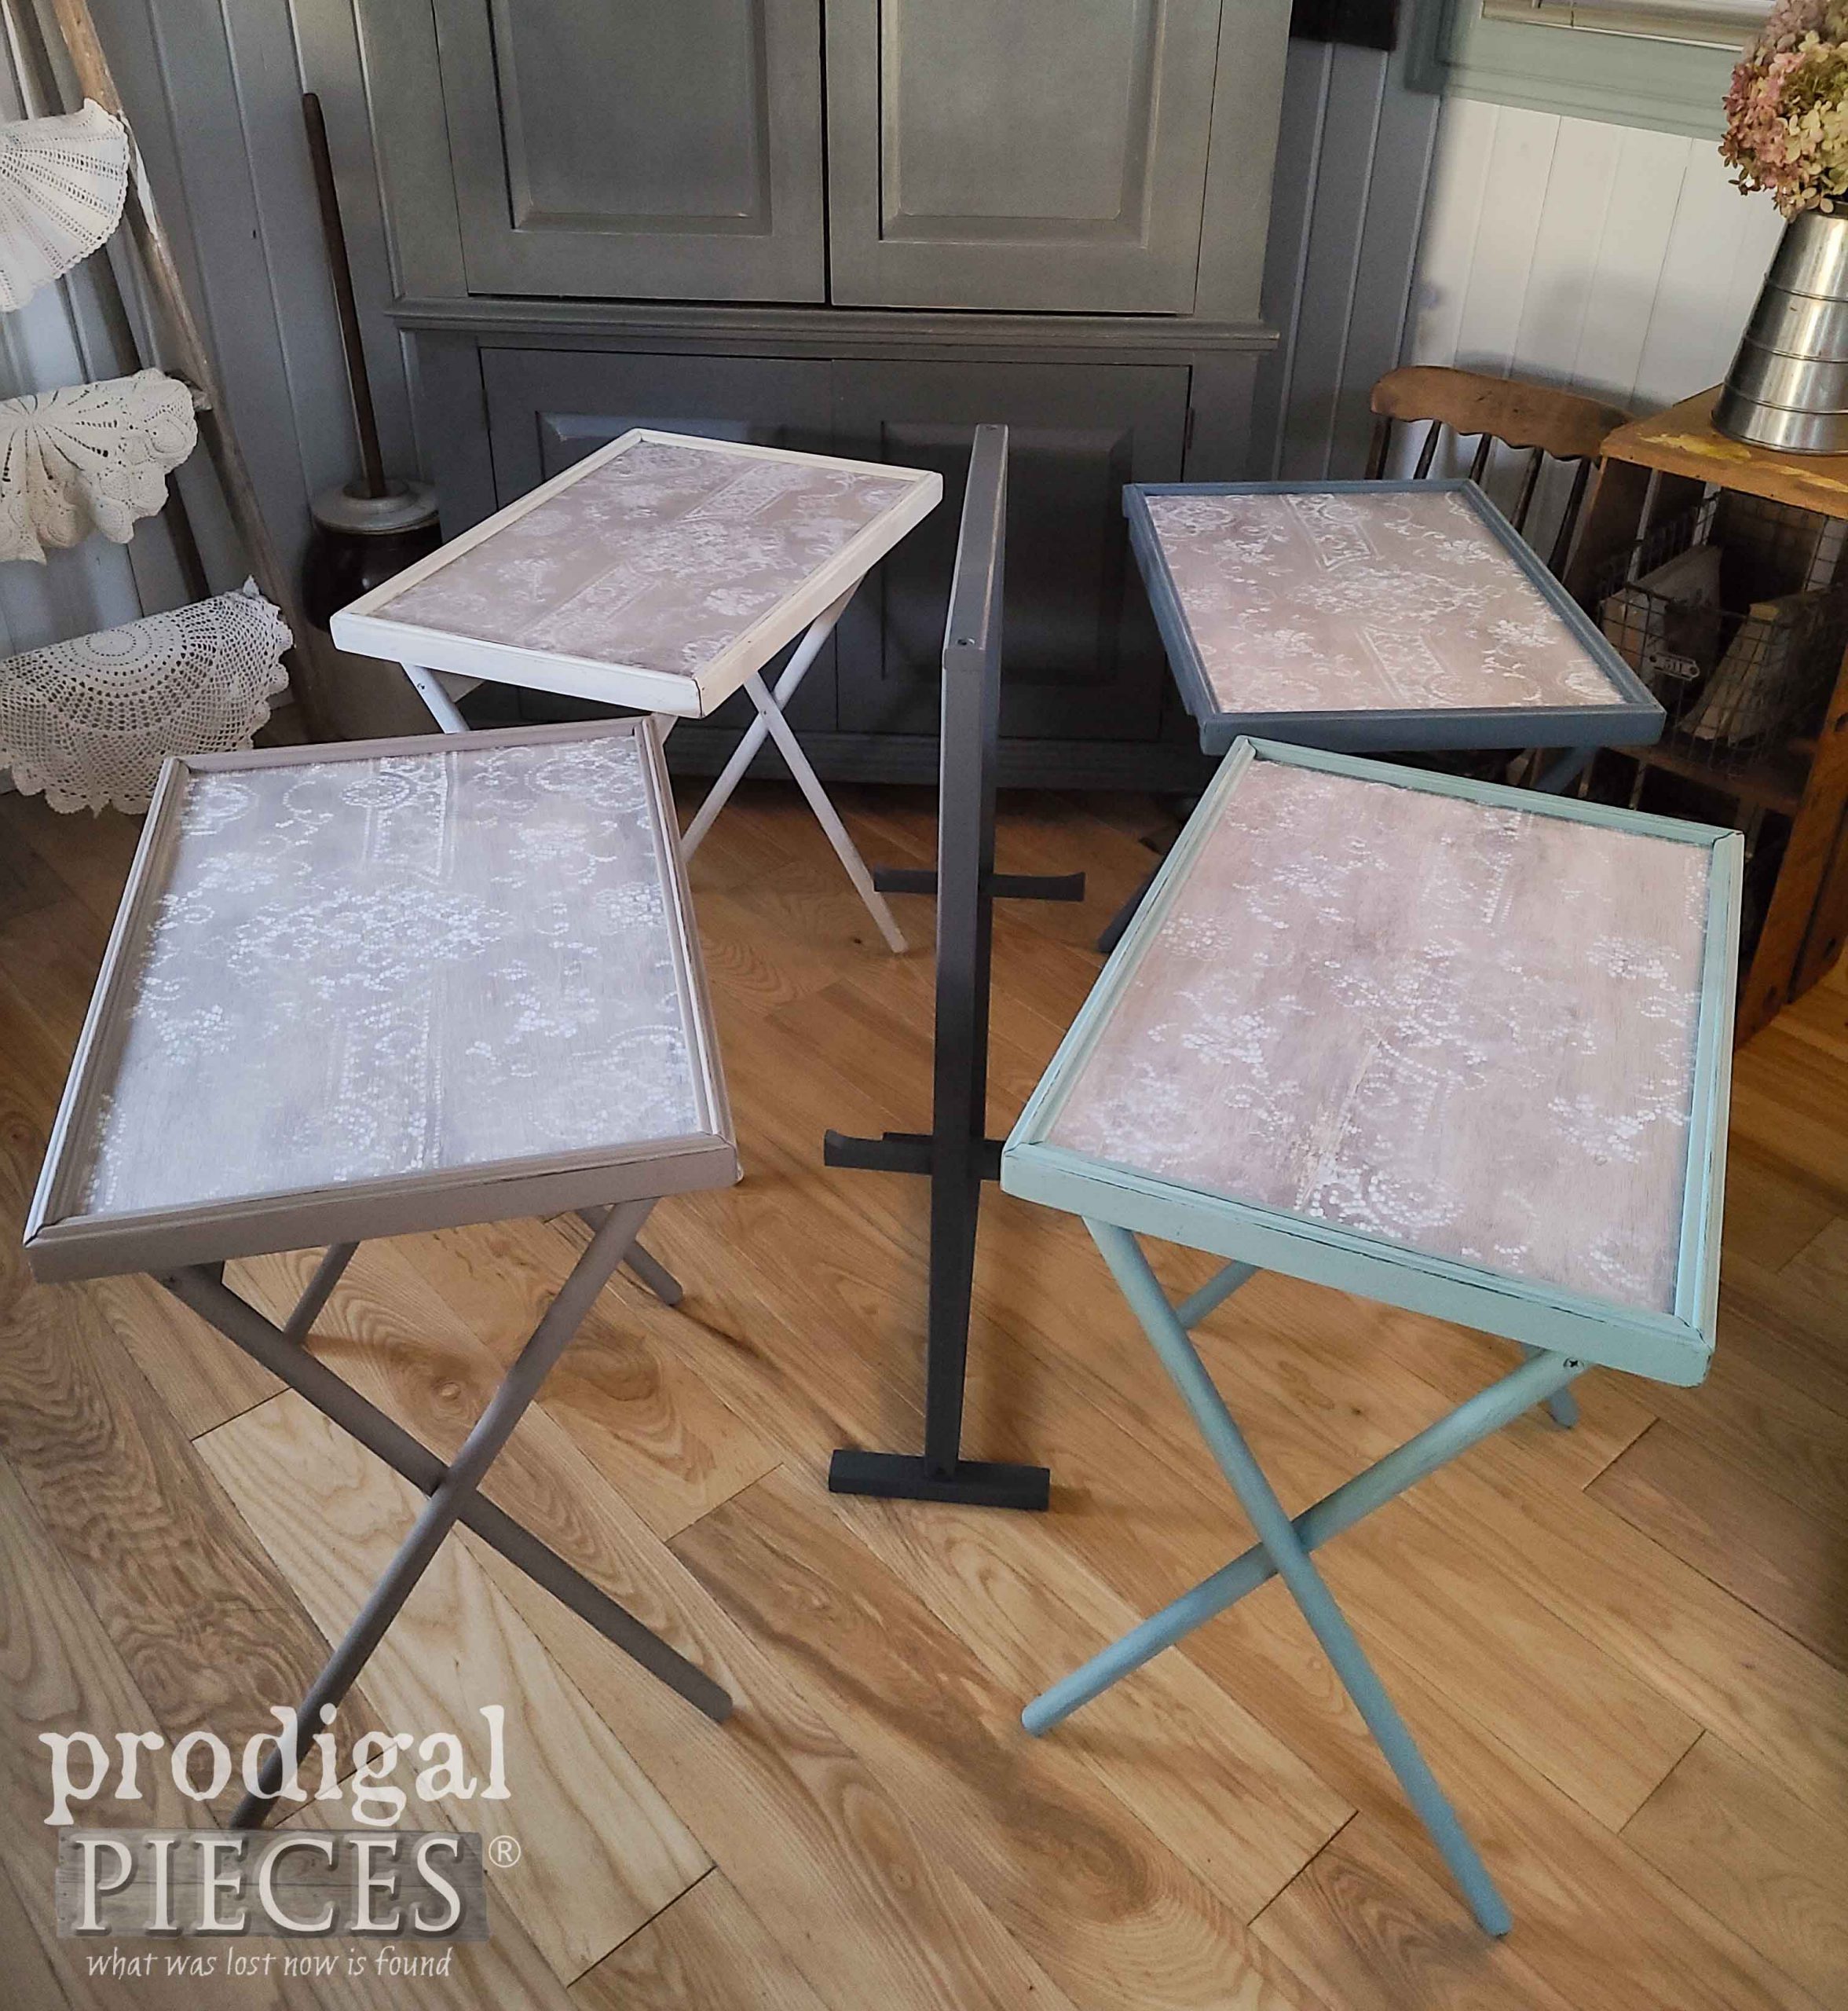 Boho Style Folding Vintage TV Trays with Stand by Larissa of Prodigal Pieces | prodigalpieces.com #prodigalpieces #boho #farmhouse #diy #furniture